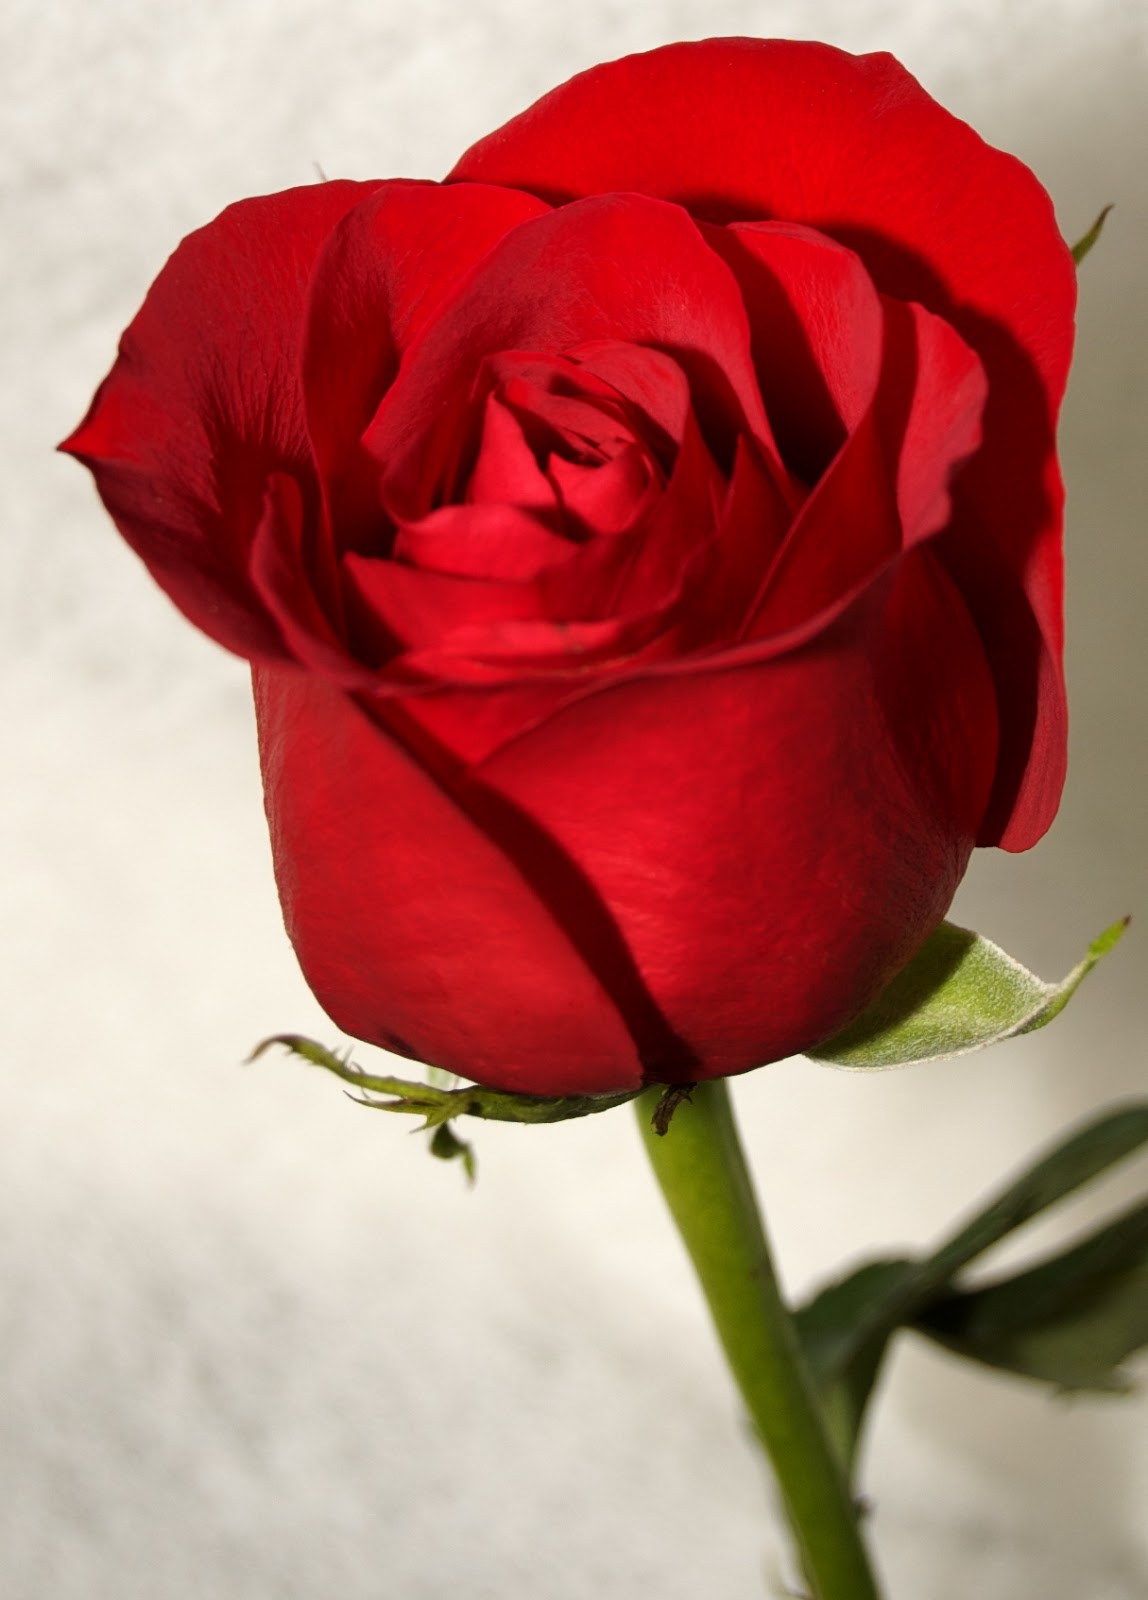 Beautiful rose images